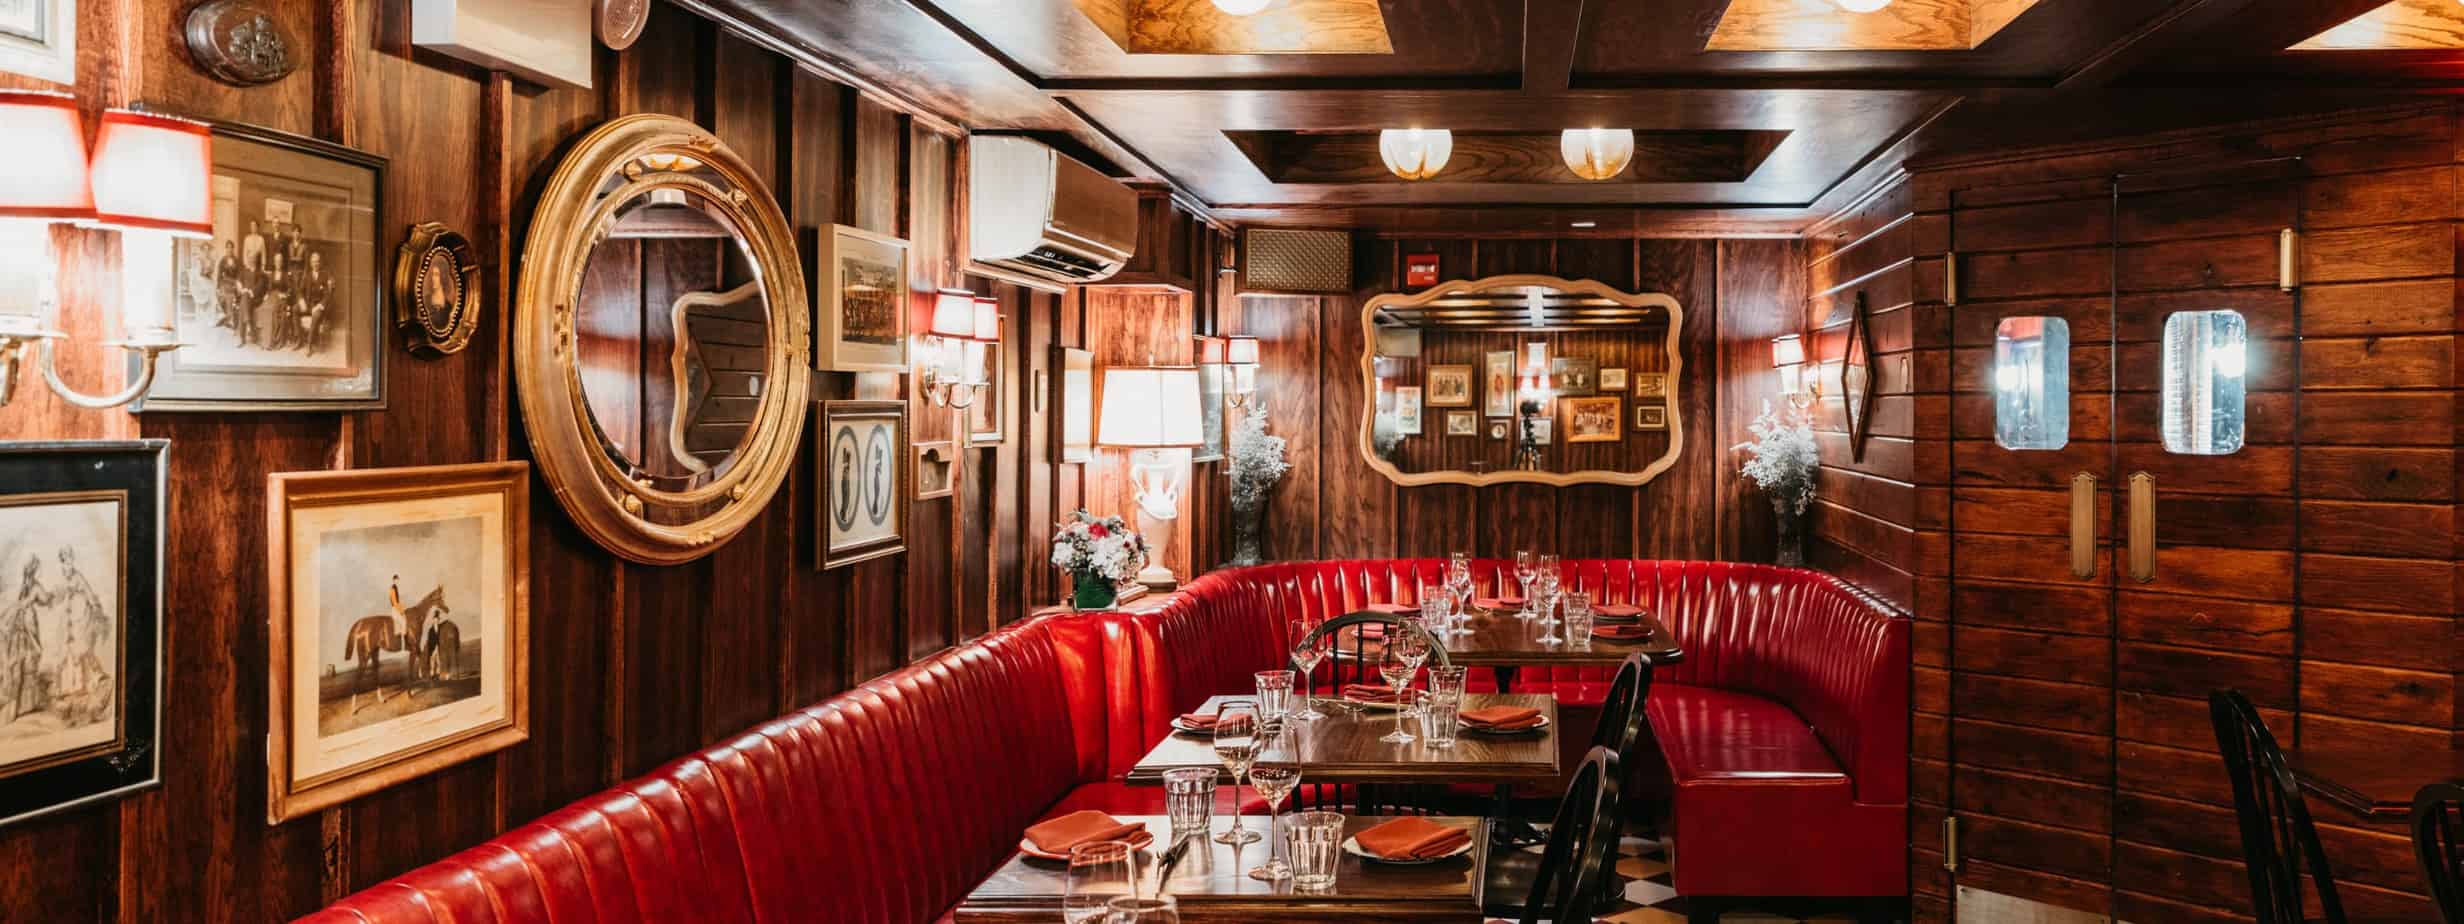 Favorite Romantic Restaurants in NYC | Stroller In The City